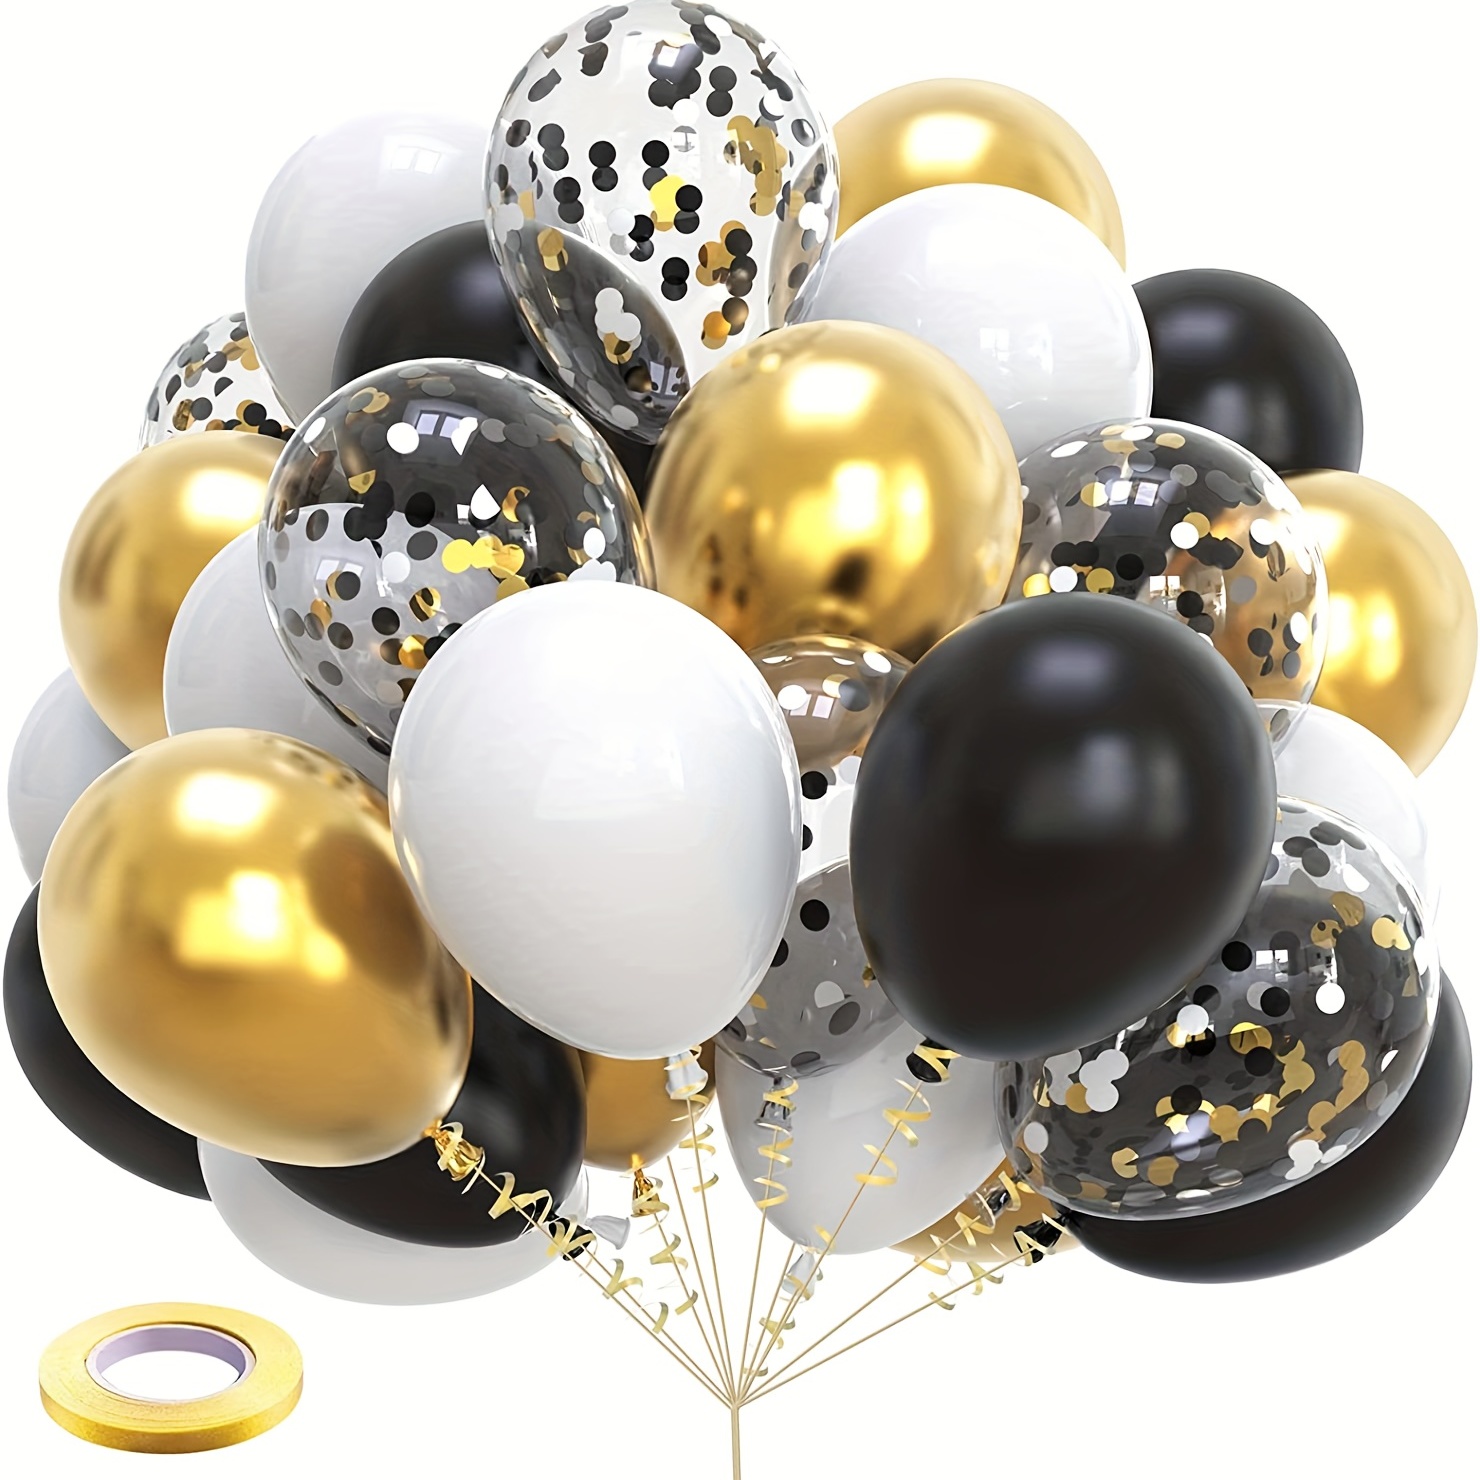 60Pcs Ballons Noir et Or, Helium Pour Ballon Or Métallisé Noir Ballon en  Latex Agate Noire Ballons Confettis Or Ballon Anniversaire Ballon Baby  Shower